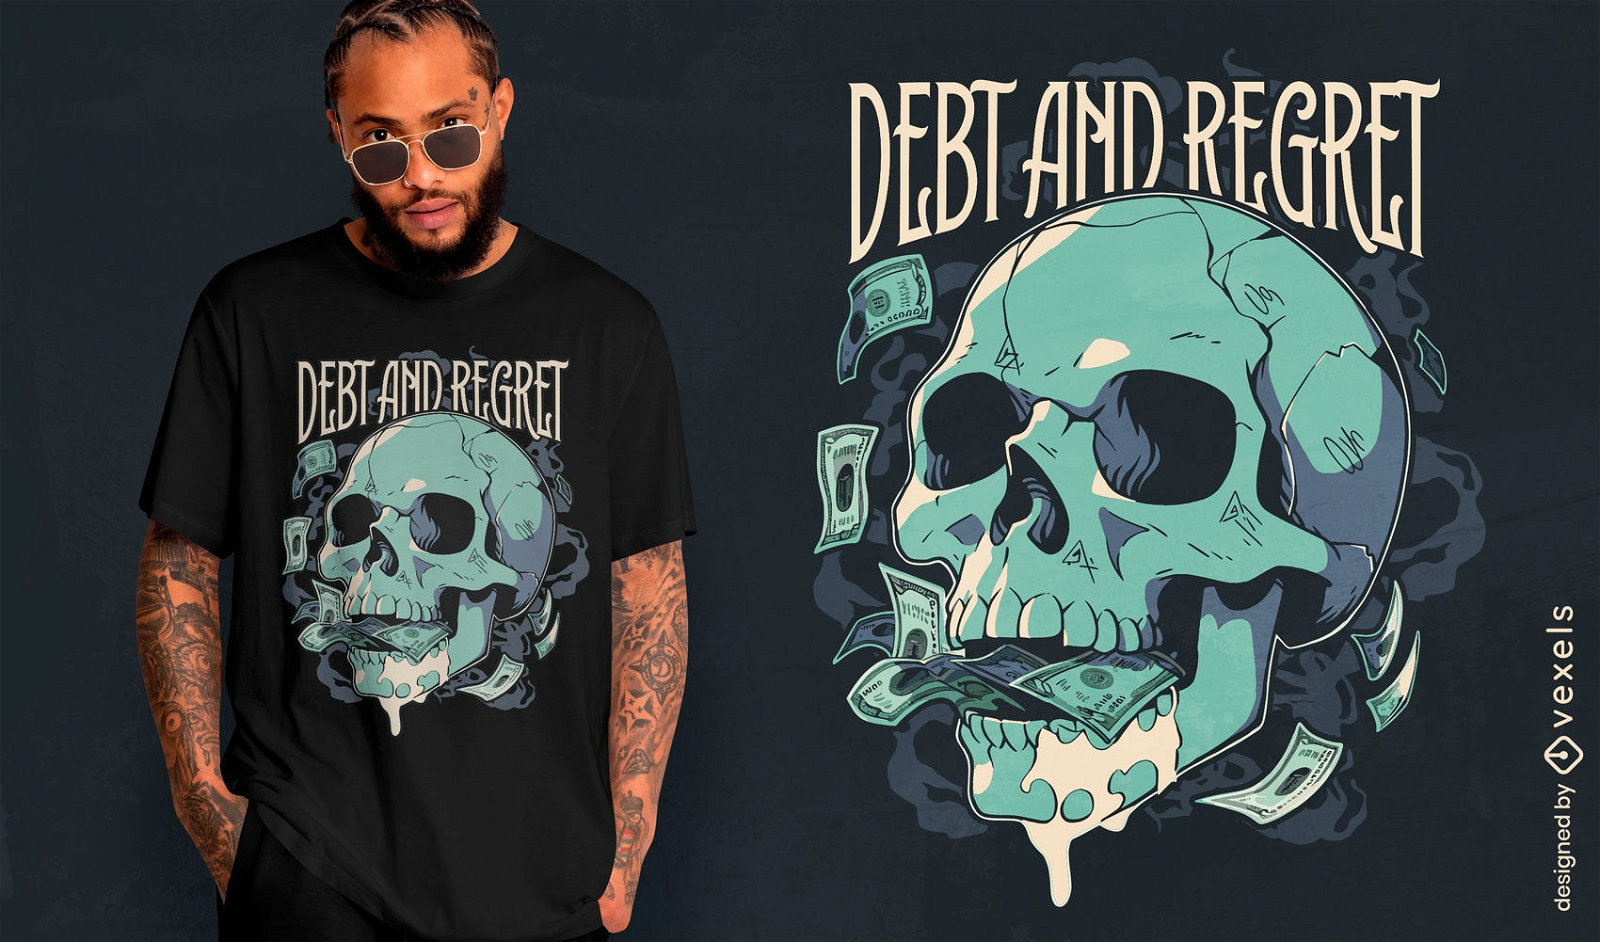 Debt and regret skull t-shirt design